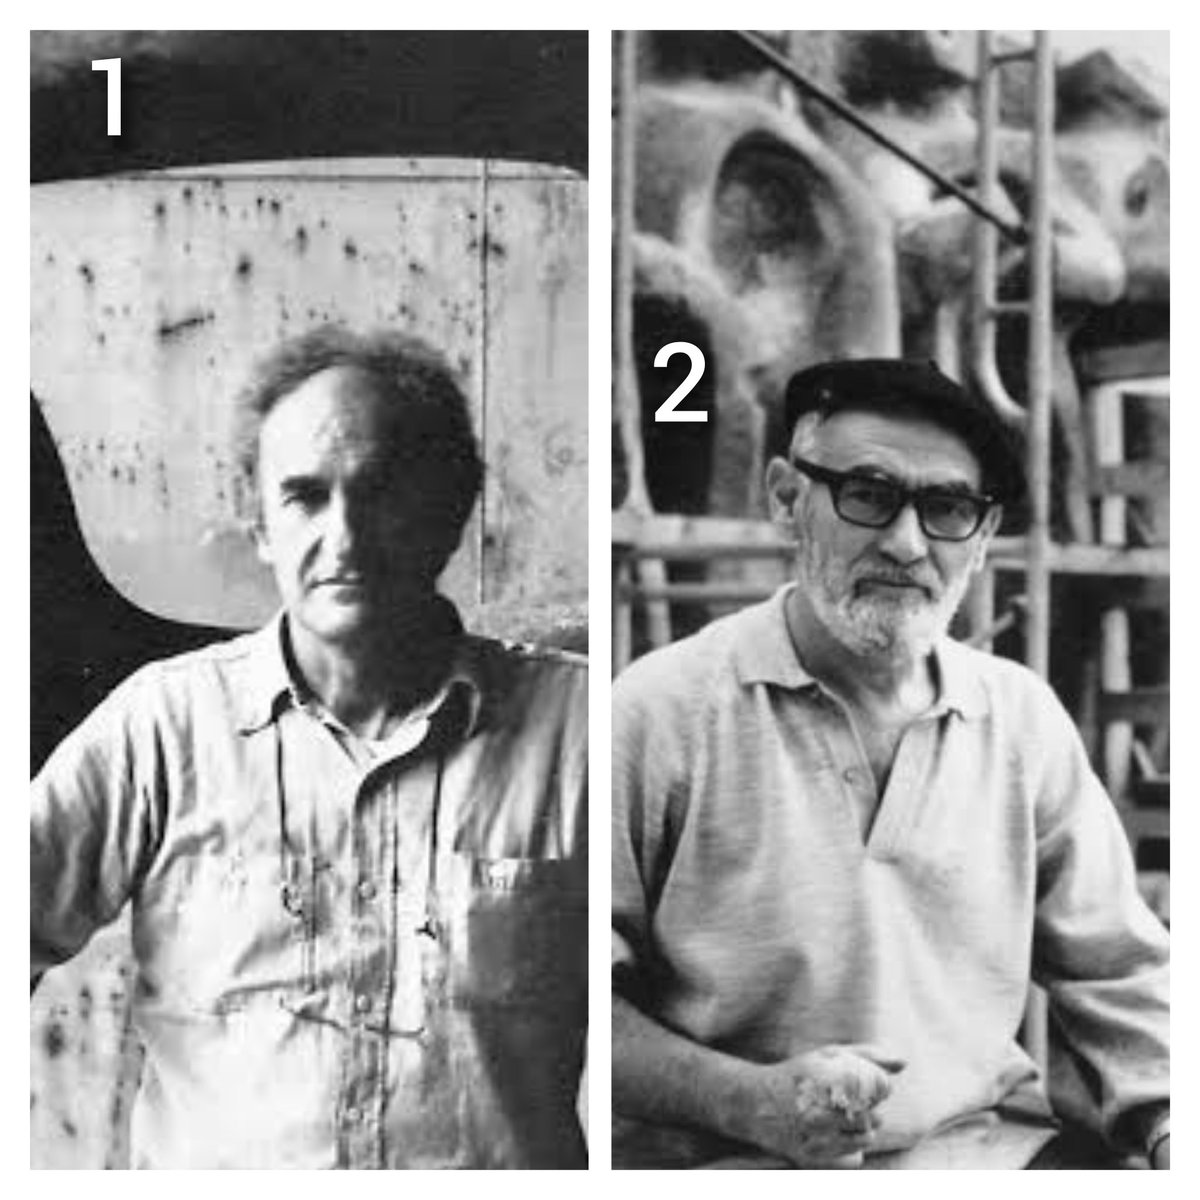 Escoge a uno...

1- Eduardo Chillida.
2- Jorge de Oteiza.

#Viernesdearte 
#Arte 
#Escultura